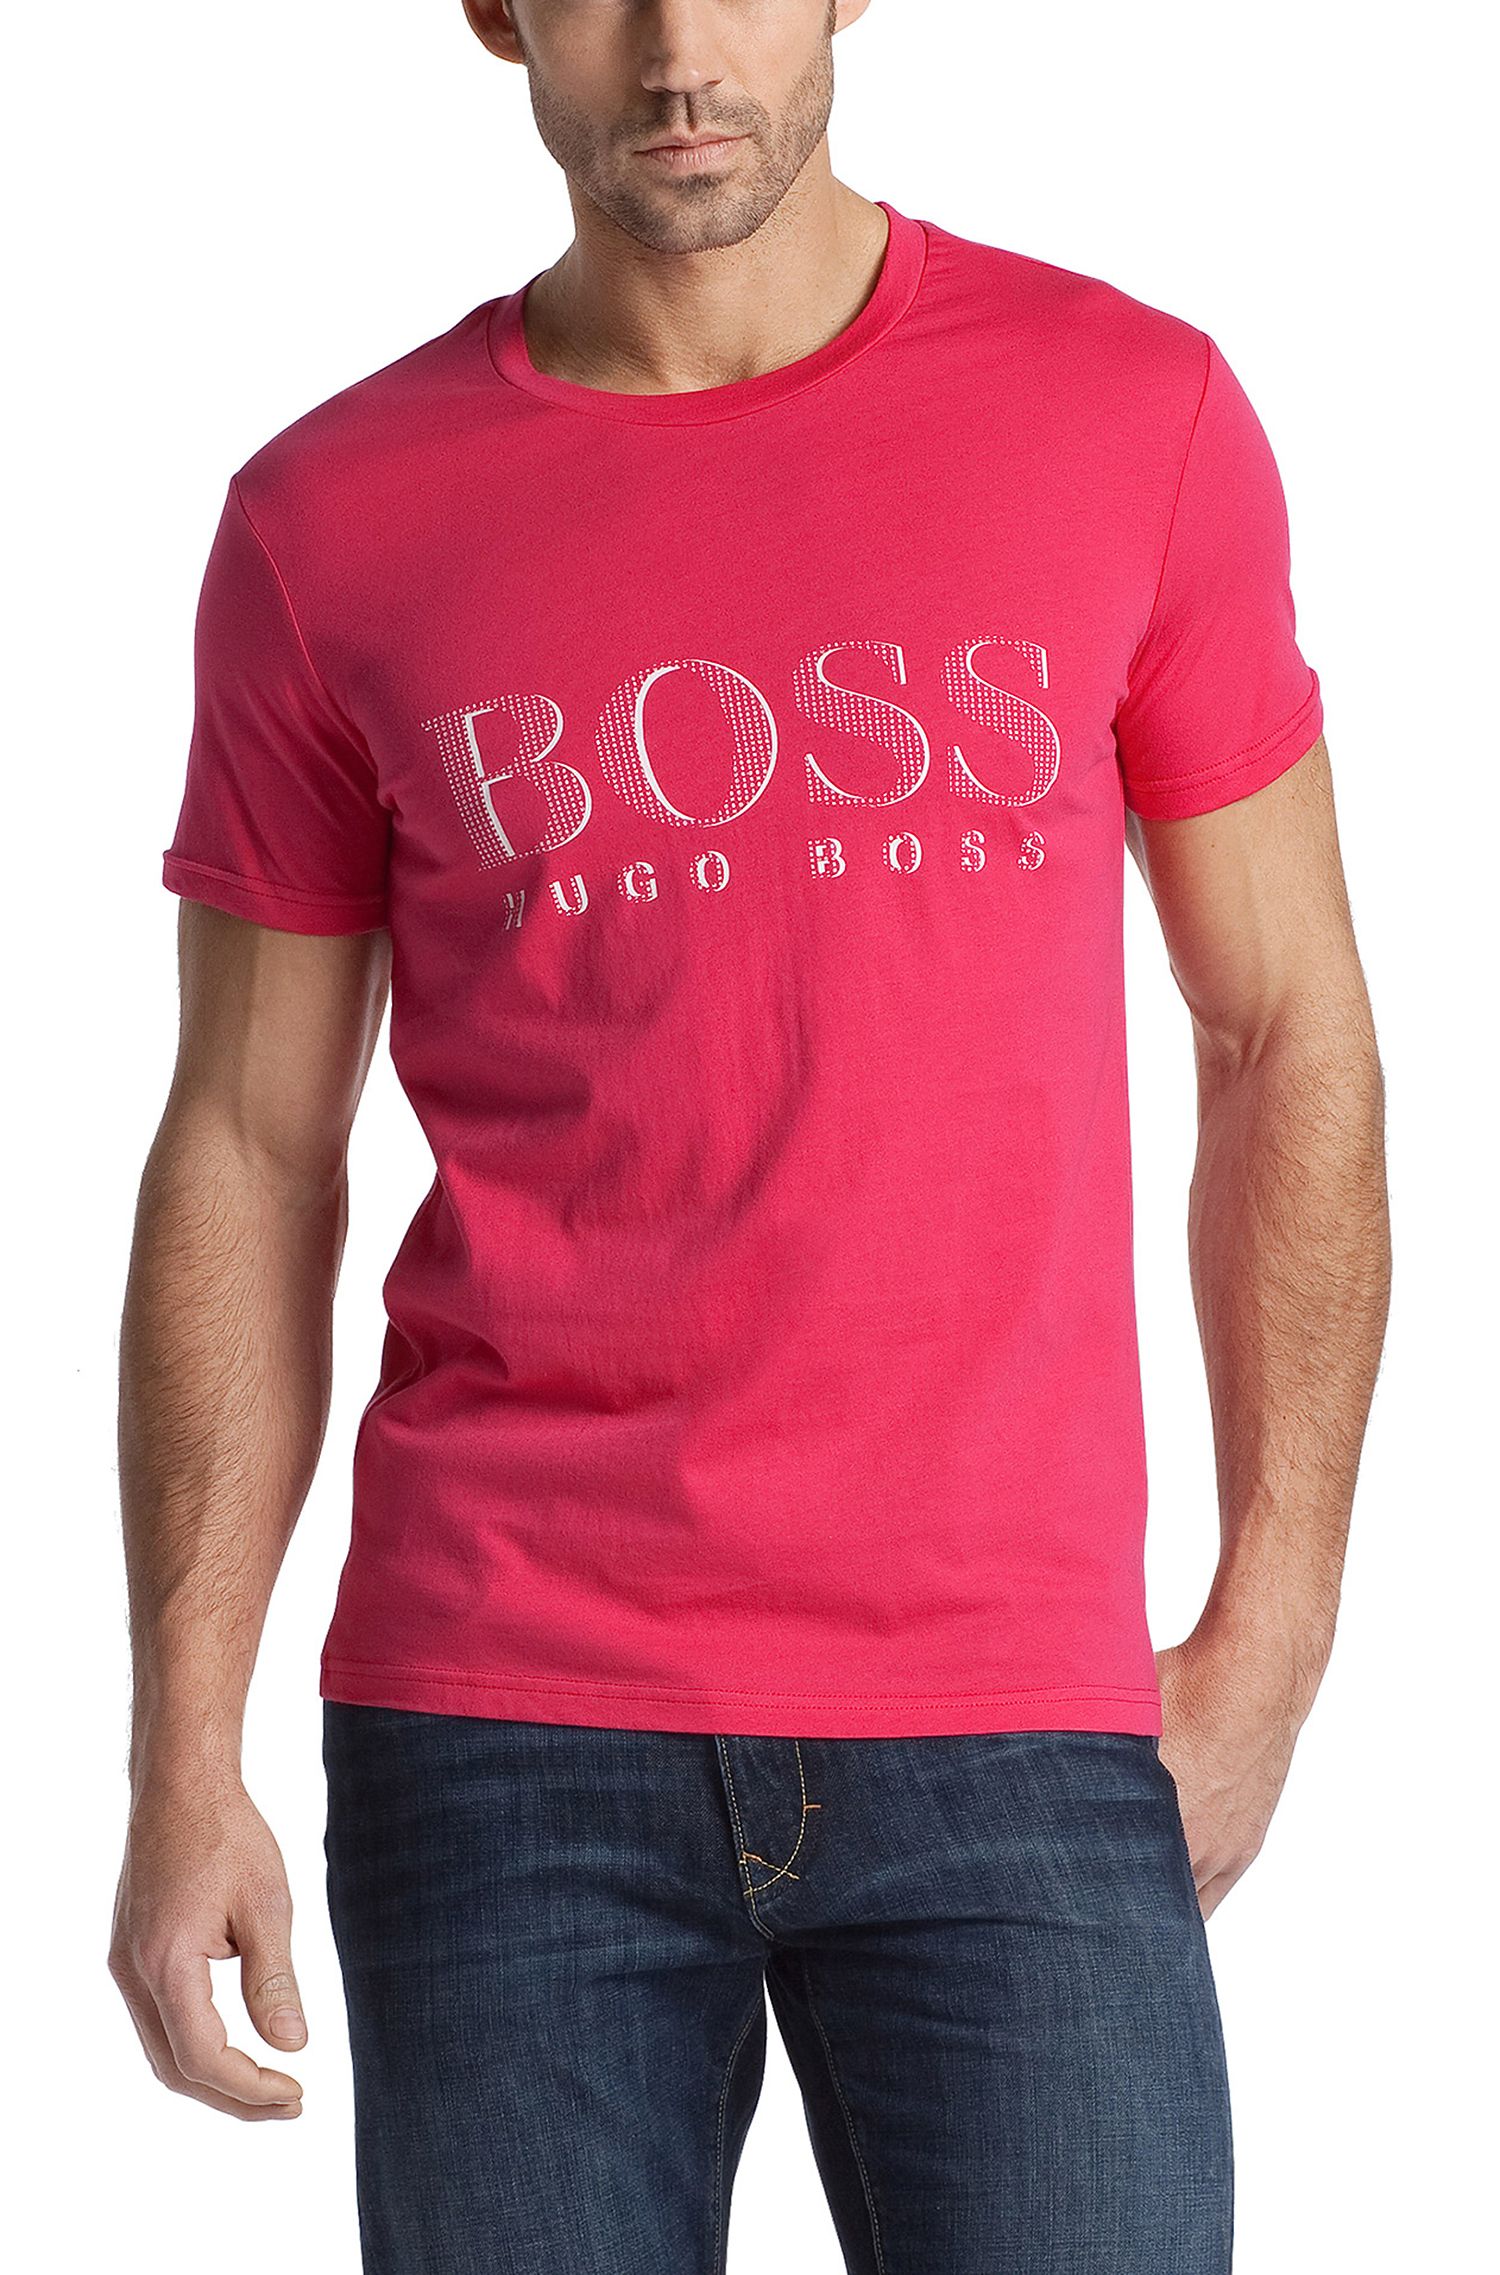 hugo boss uv protection t shirt